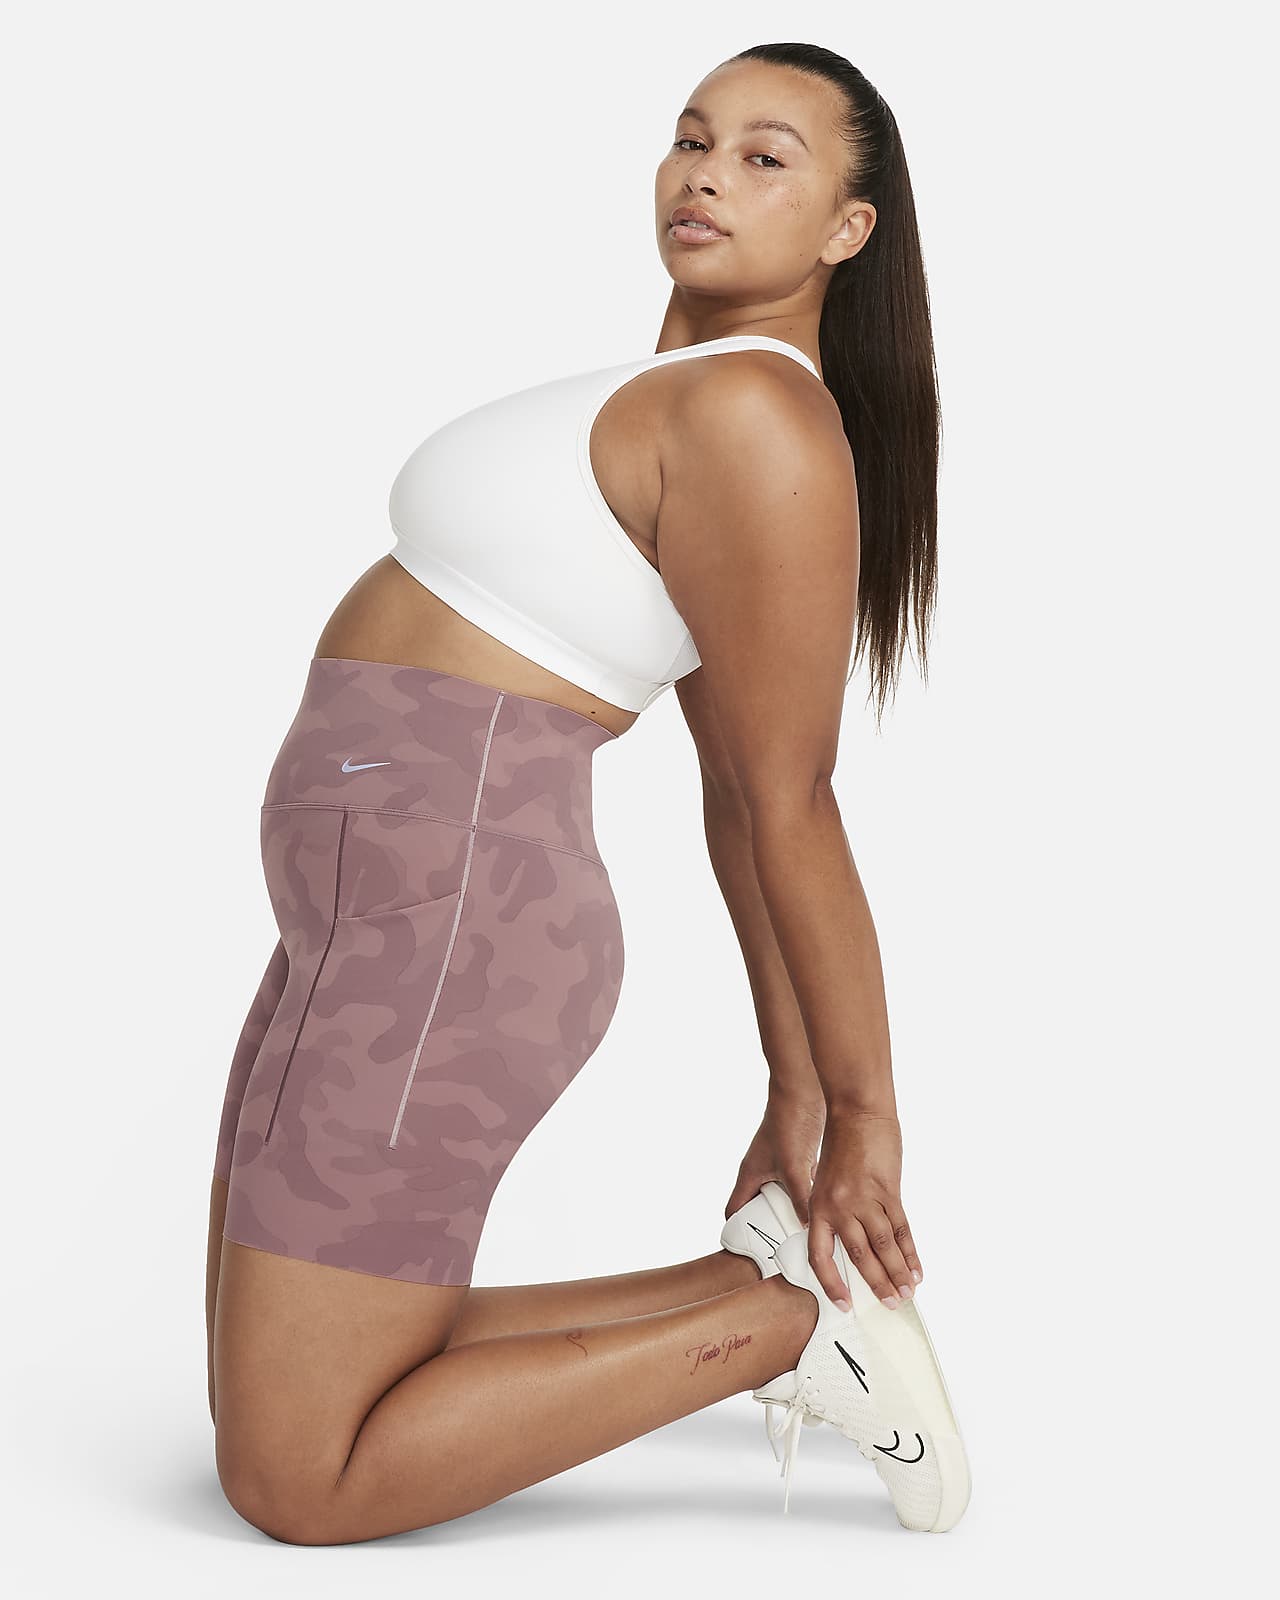 Nike Universa Women's Medium-Support High-Waisted 8" Camo Biker Shorts with Pockets